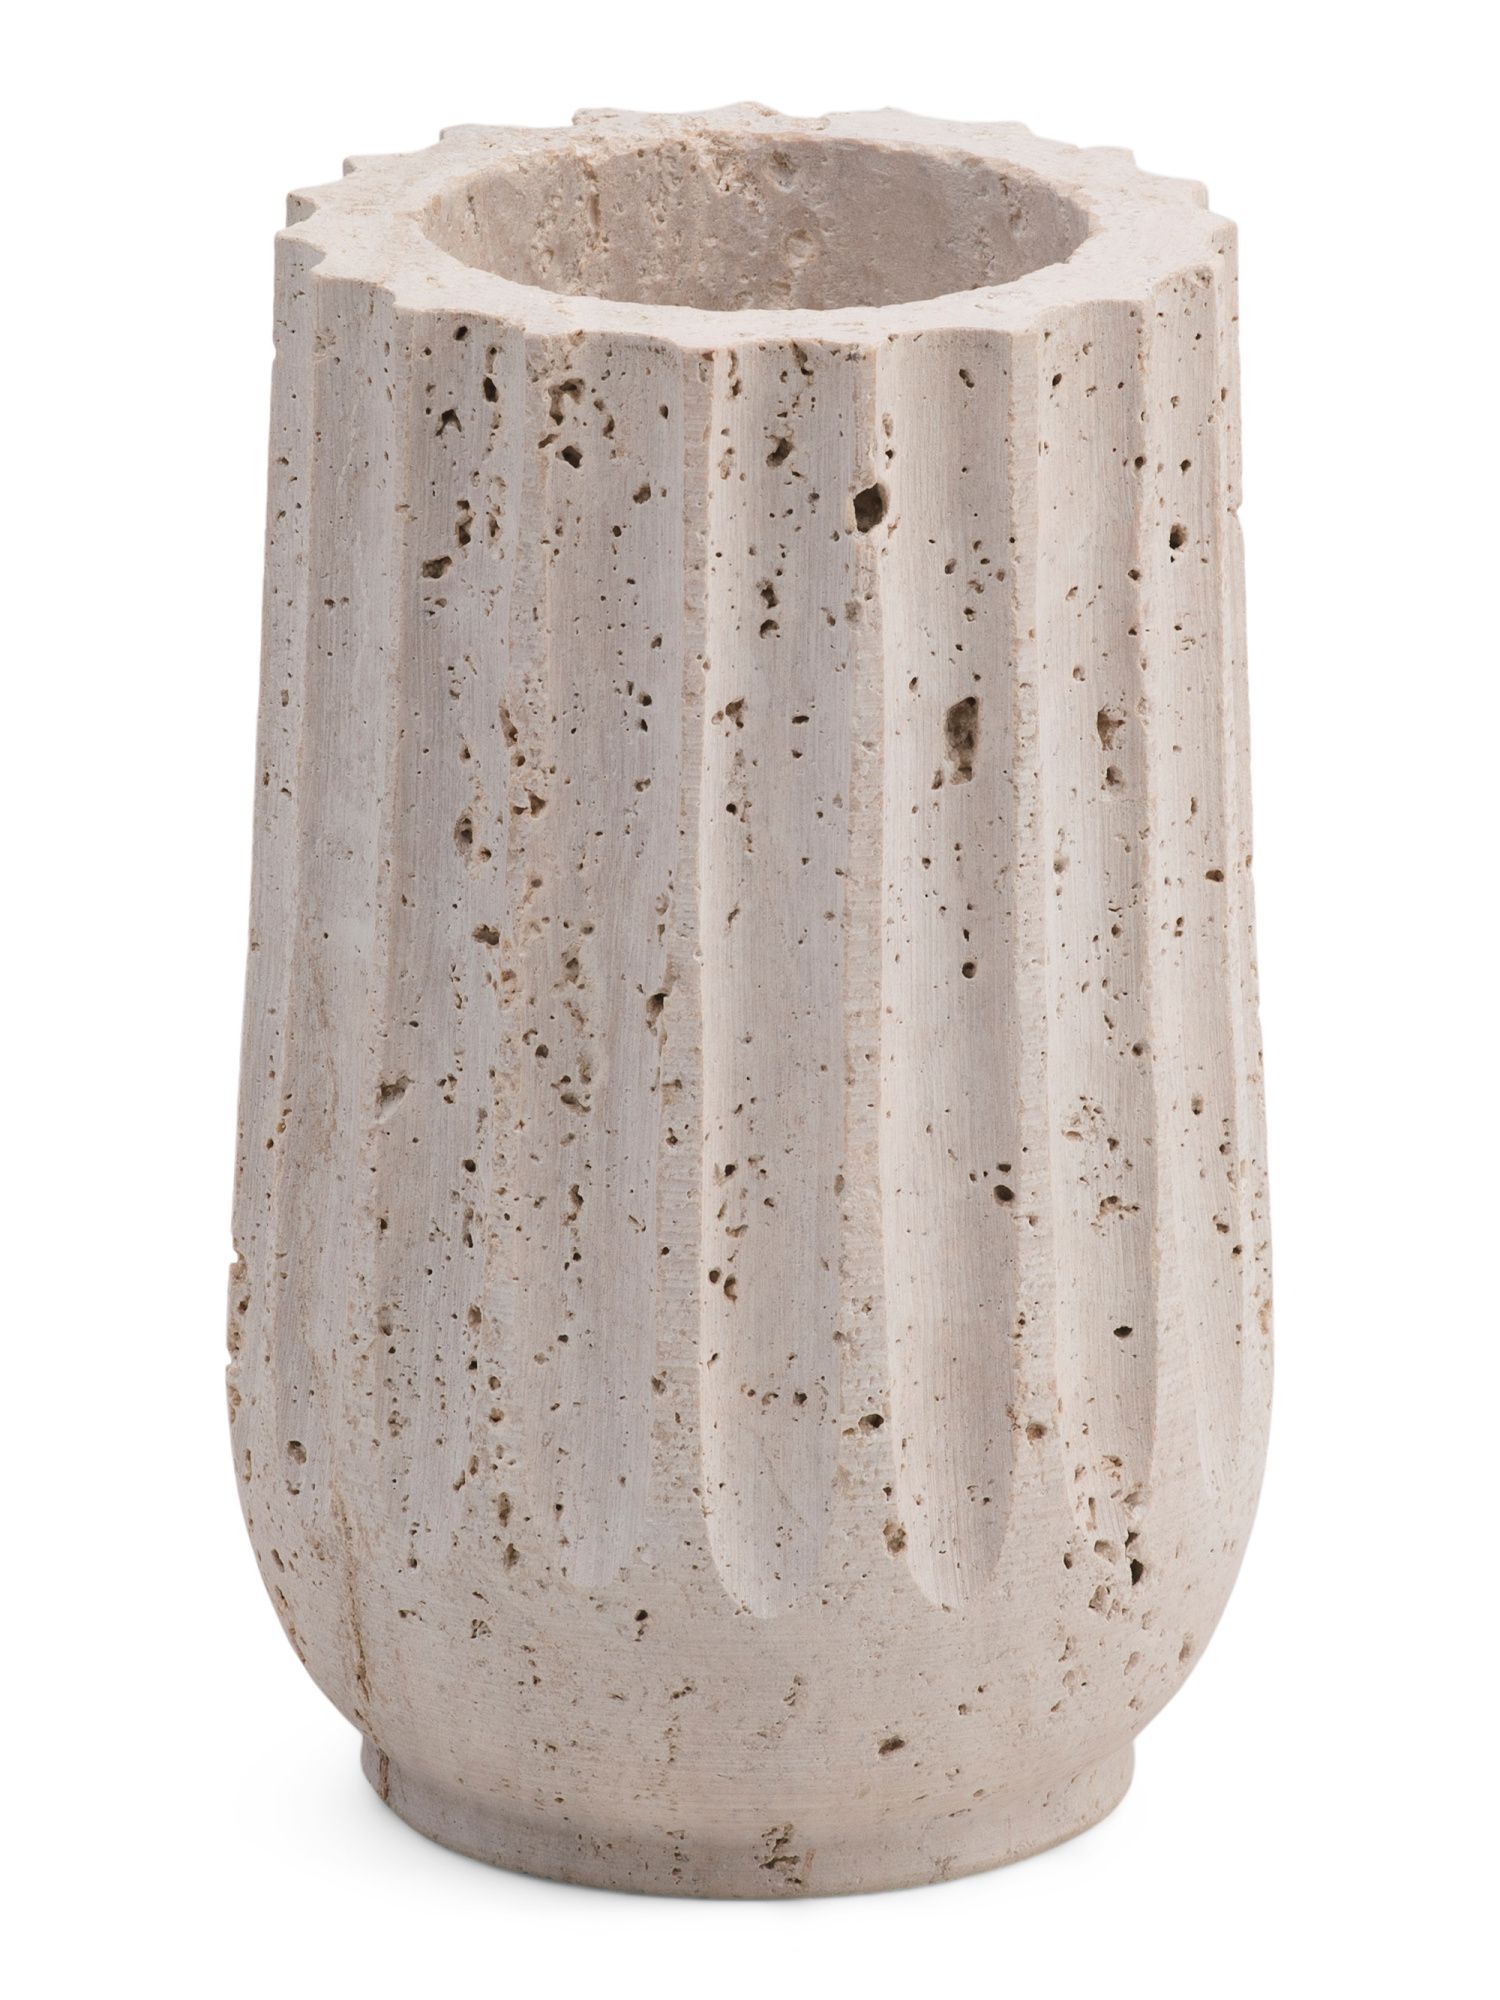 8in Travertine Stone Fluted Vase | Marshalls